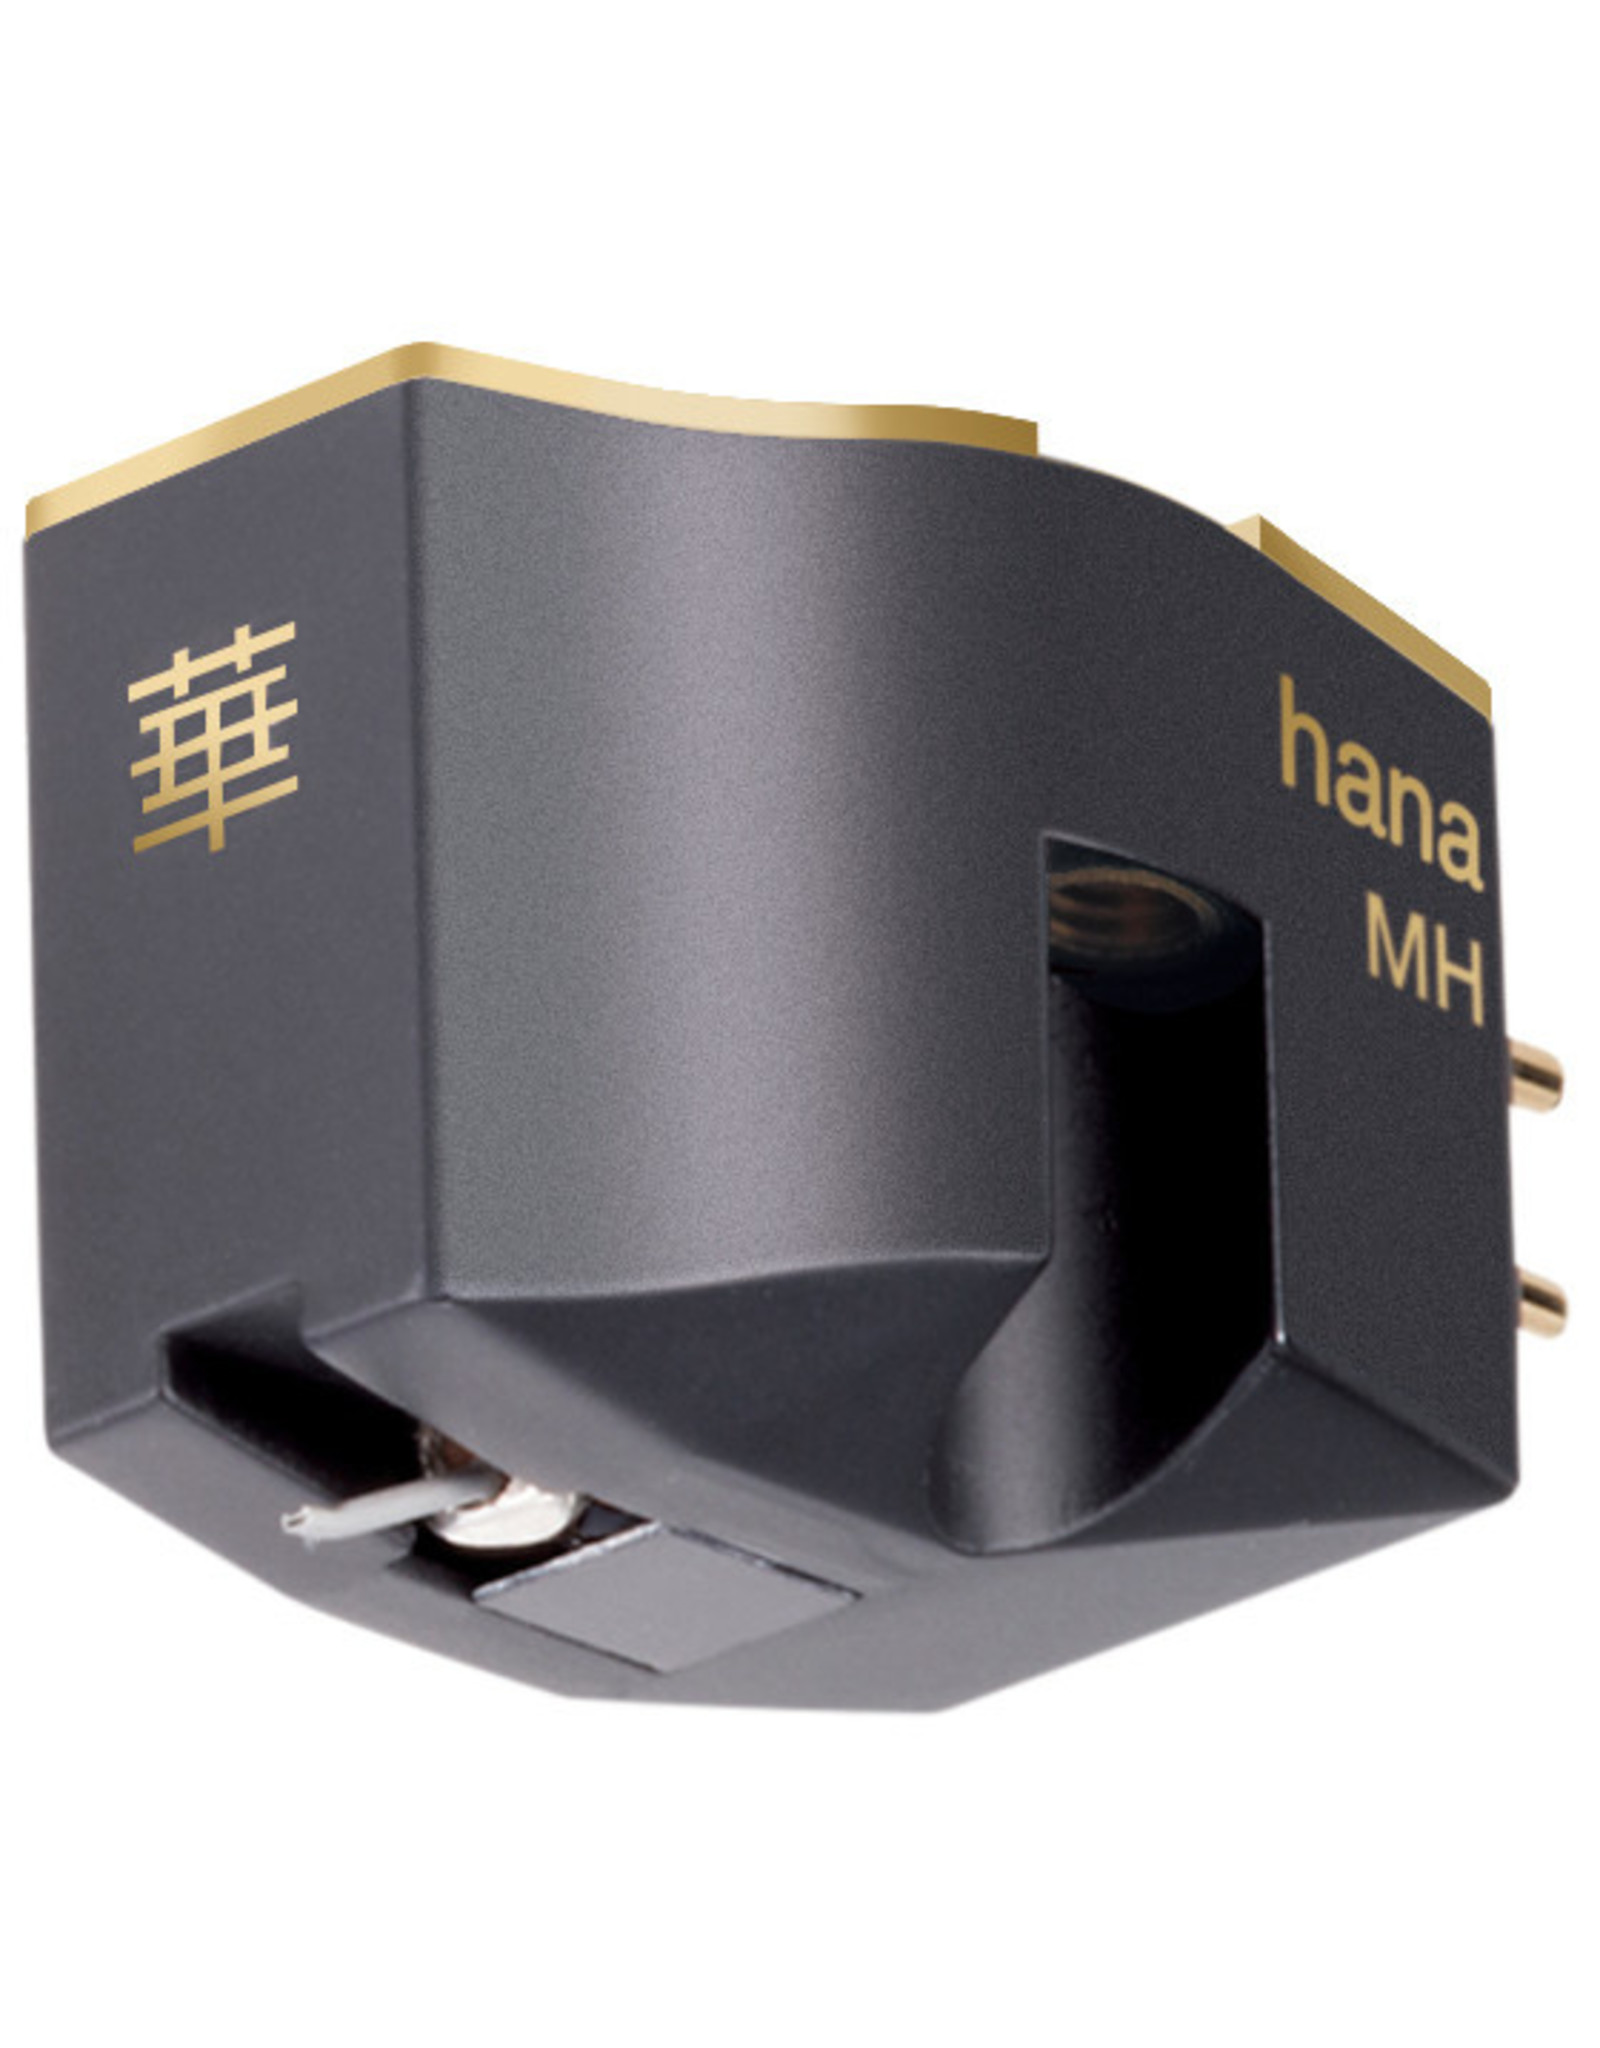 Hana Hana MH - Microline High Output MC Phono Cartridge